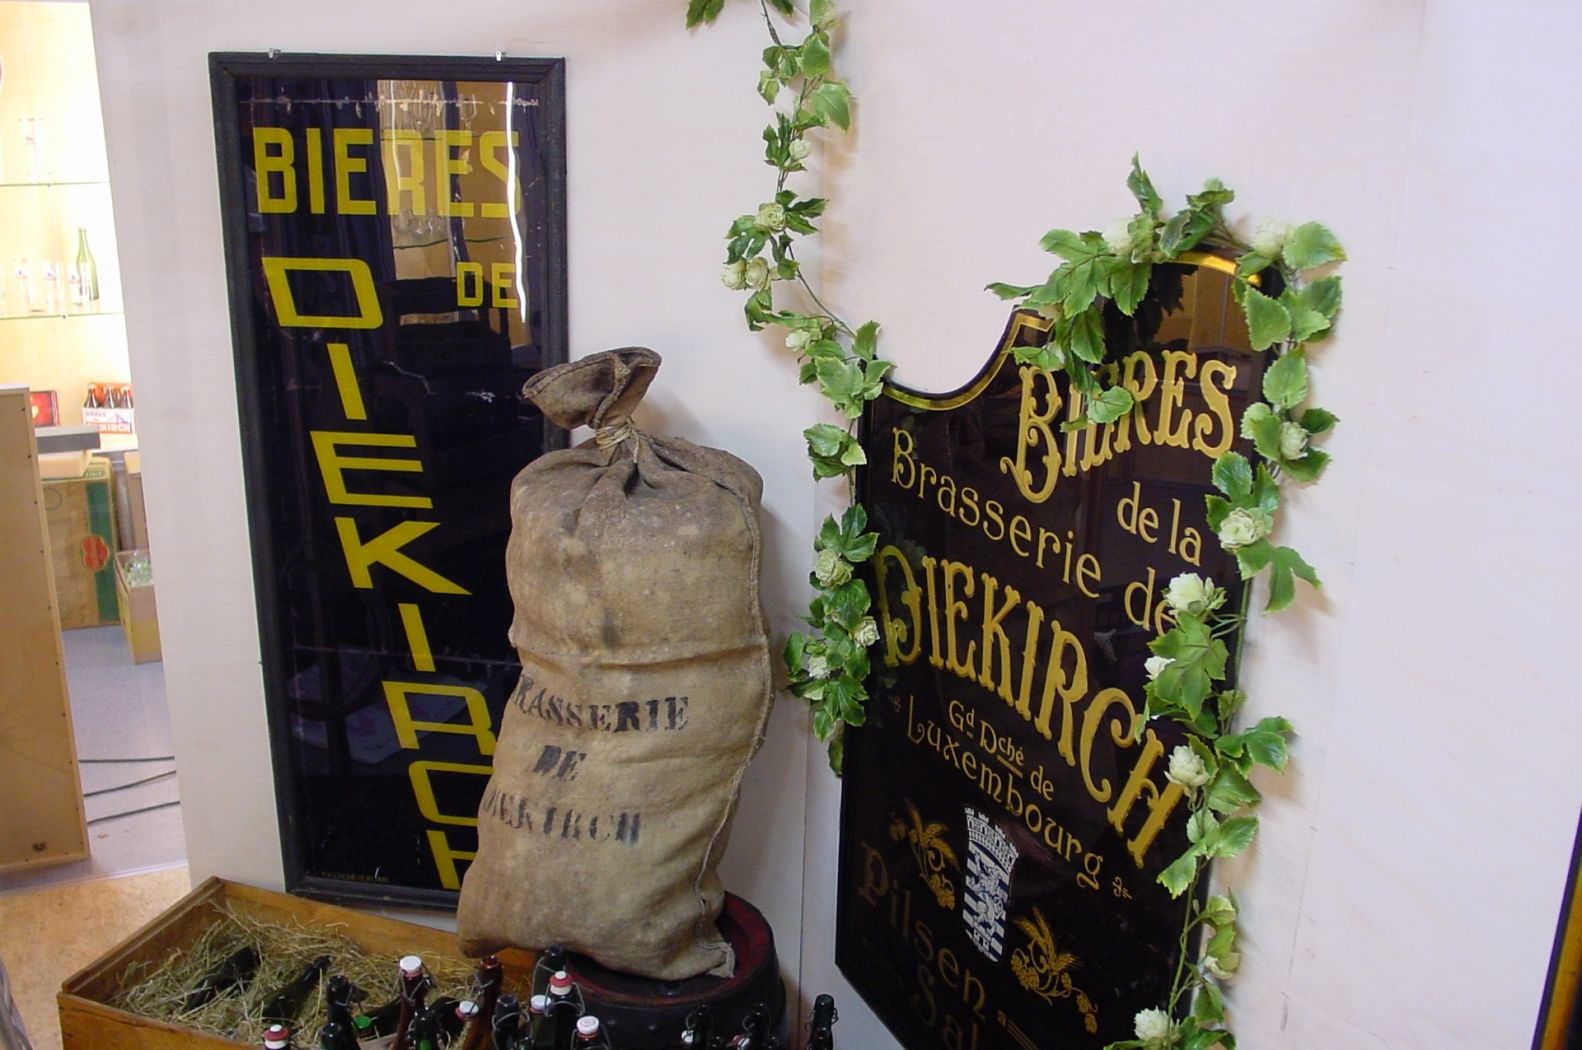 Beermuseum of the Diekirch Brewery